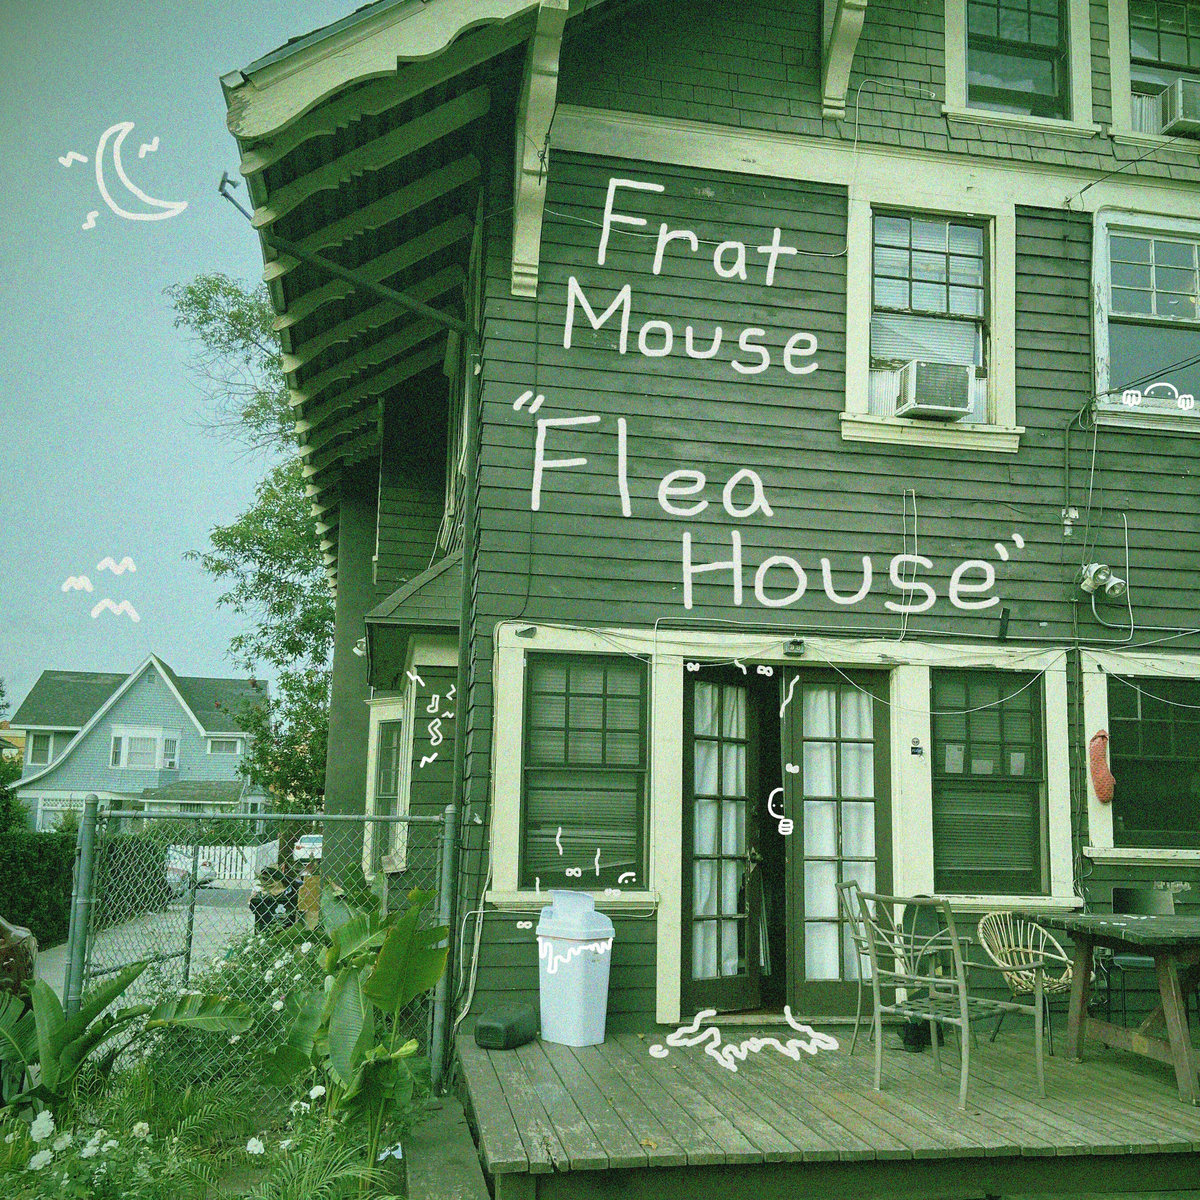 Introducing: Frat Mouse – flea house & 3 Qs